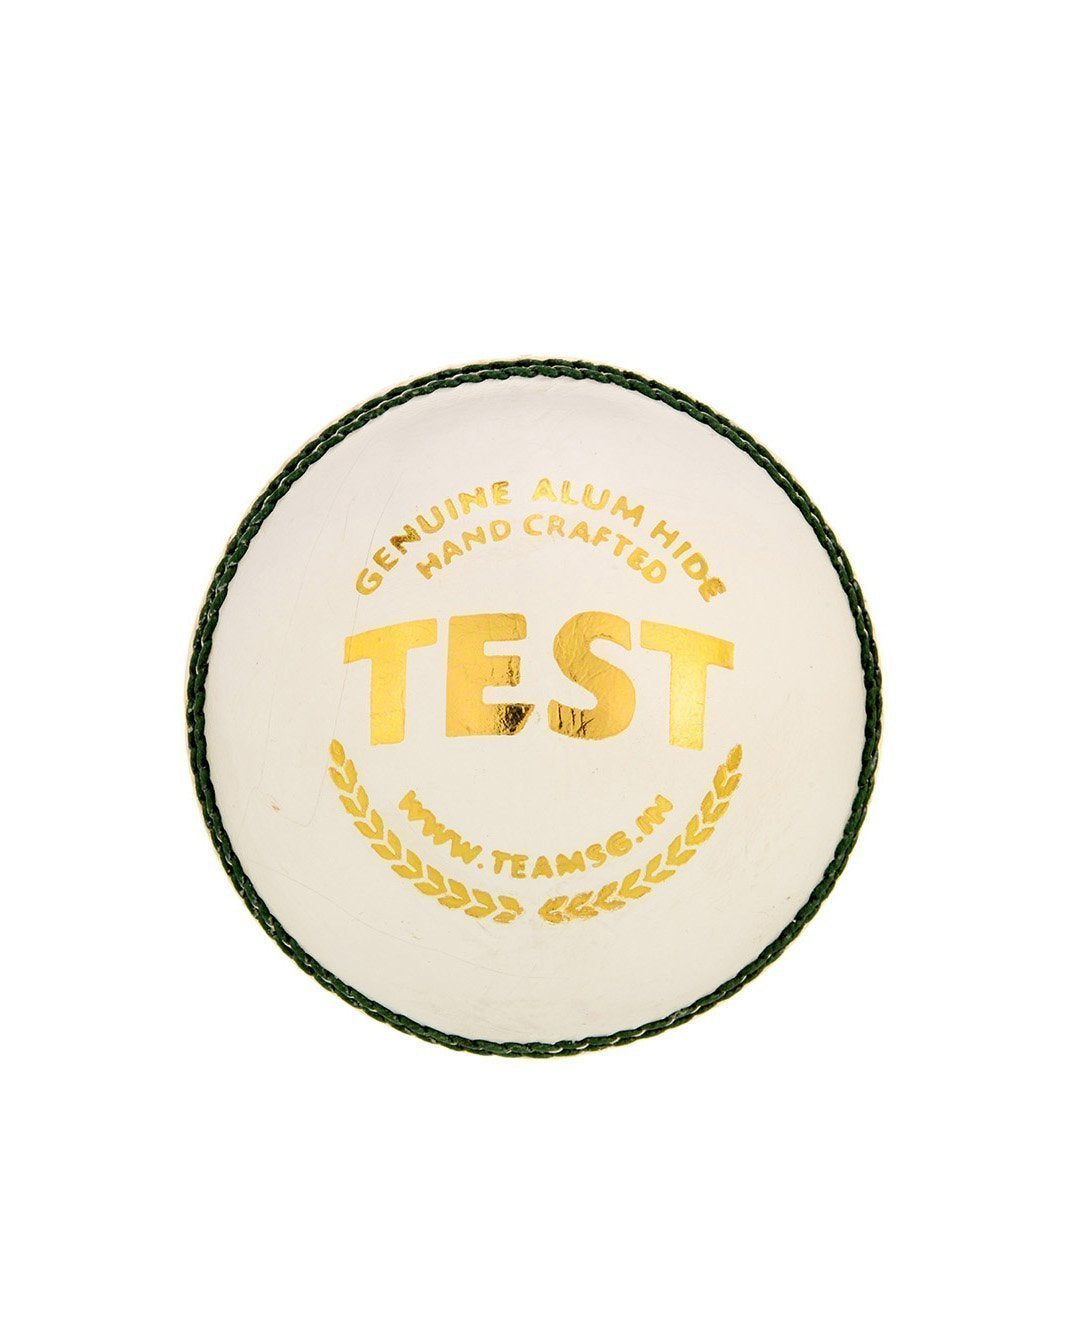 SG Test White Cricket Ball